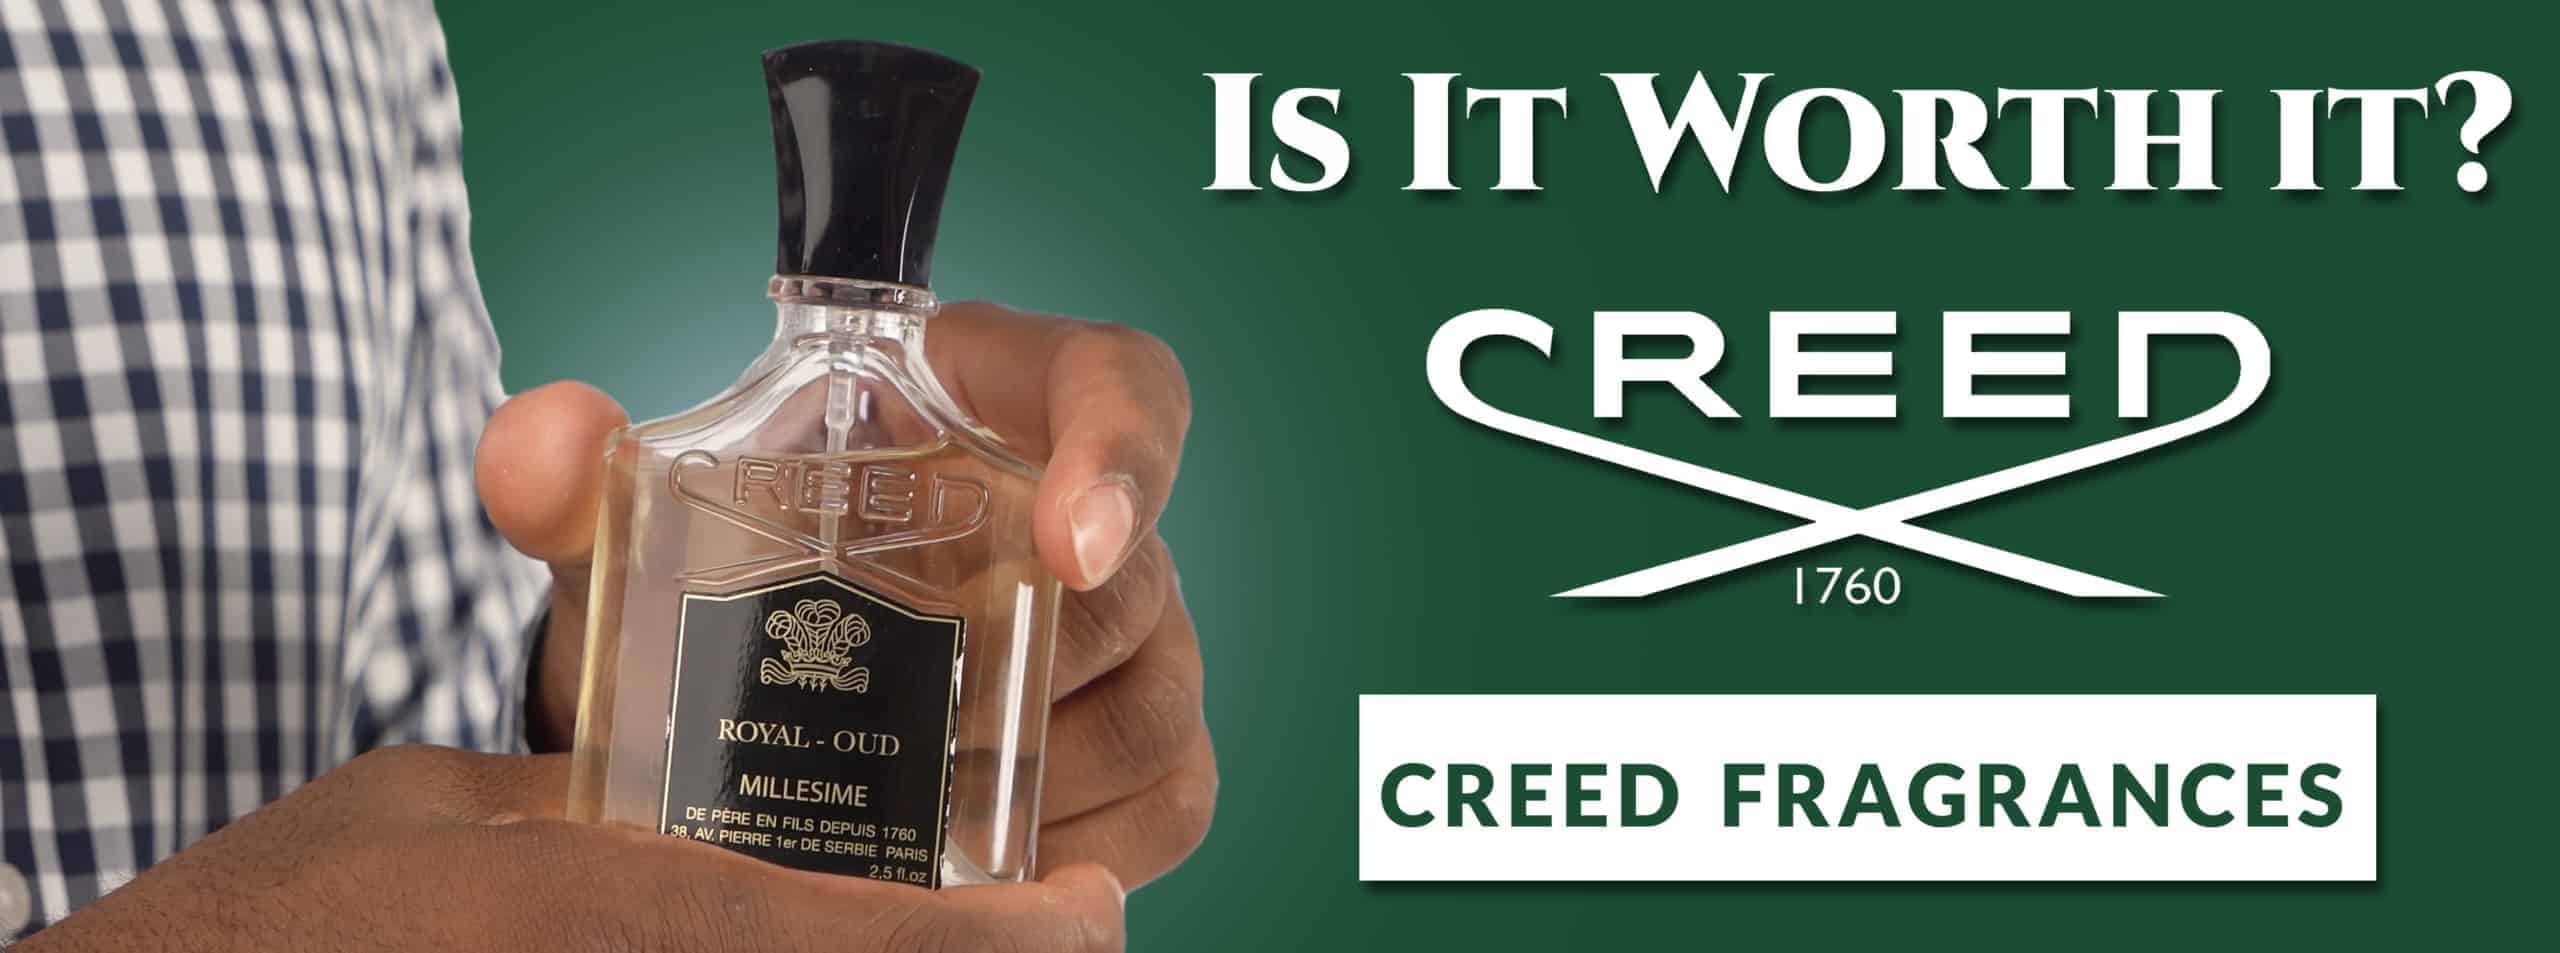 creed perfume green bottle